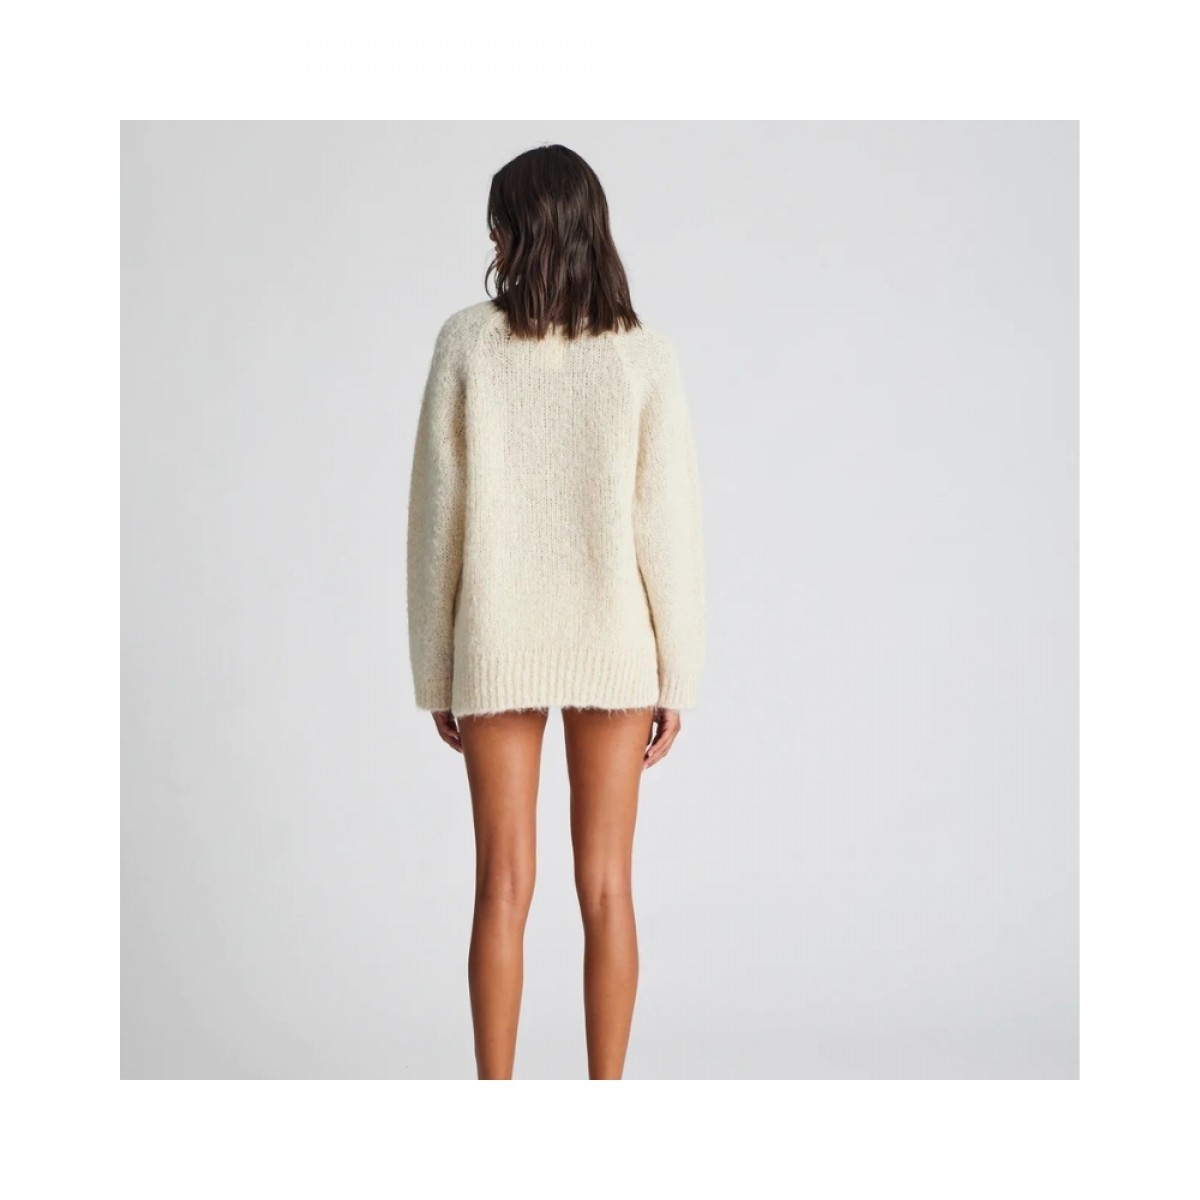 sille knit - off white - model ryg